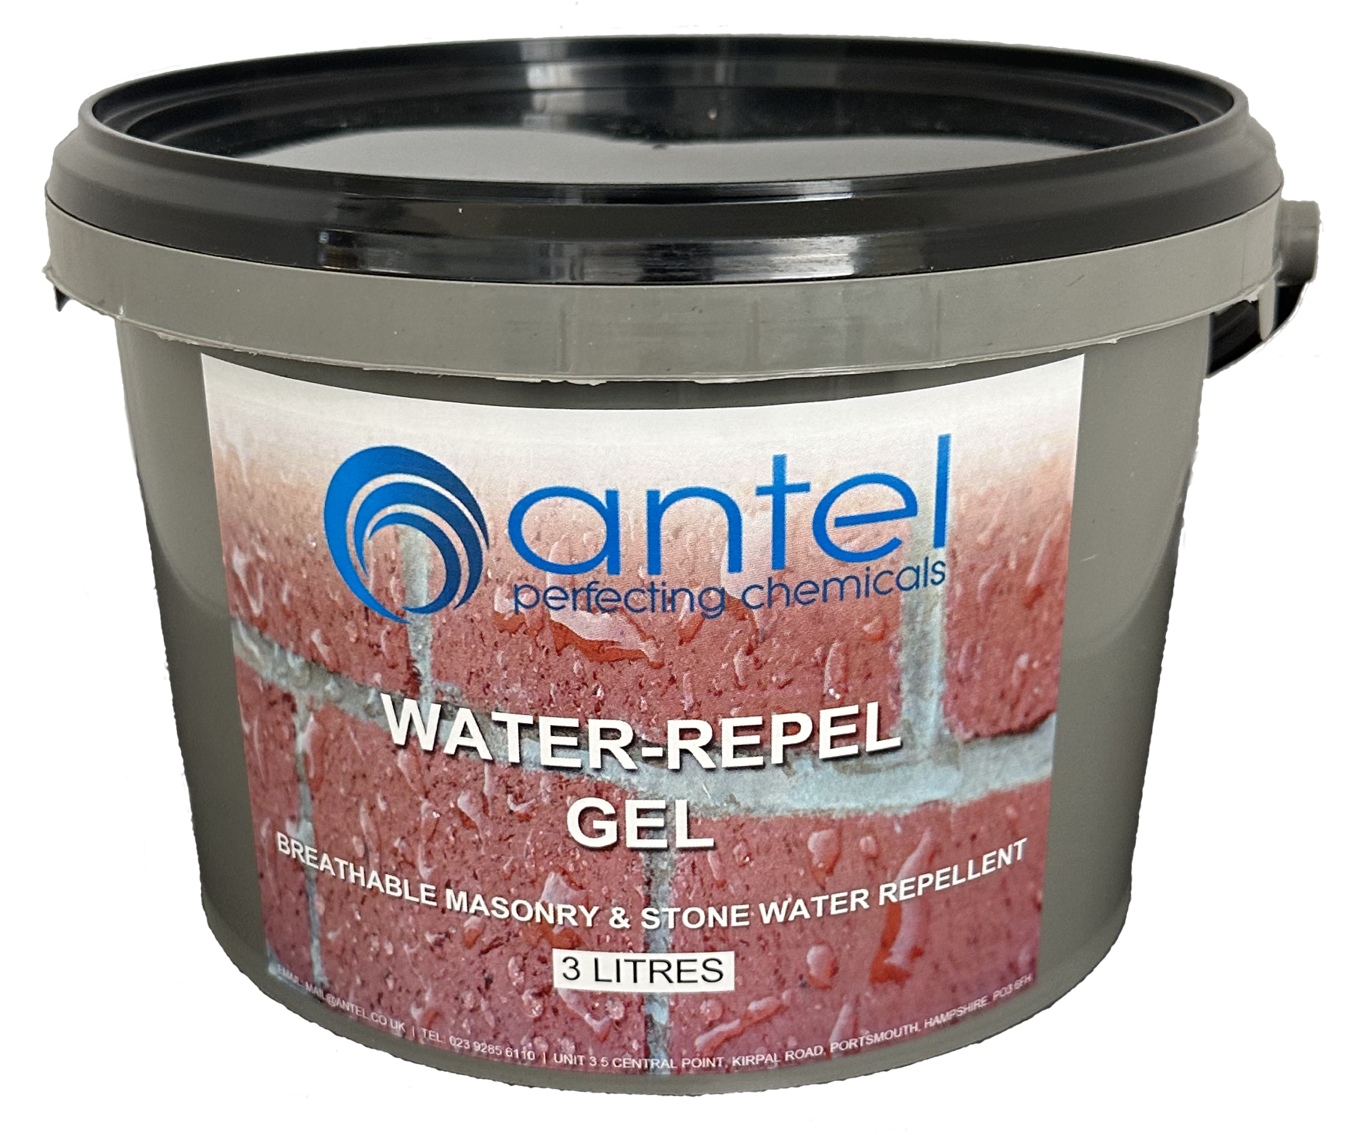 Water-Repel Gel